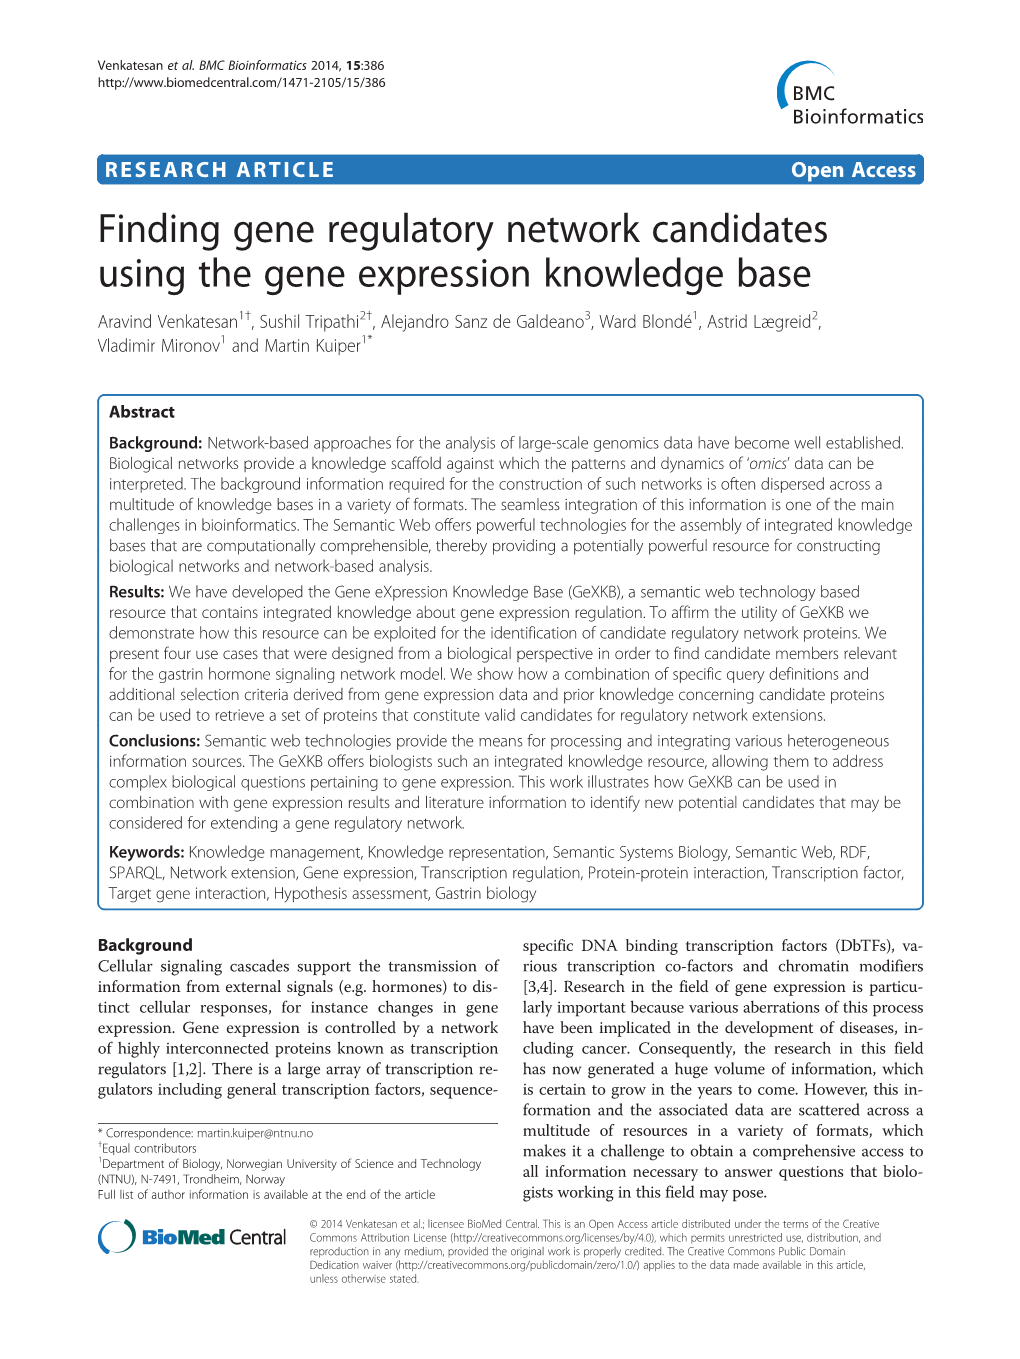 Finding Gene Regulatory Network Candidates Using the Gene